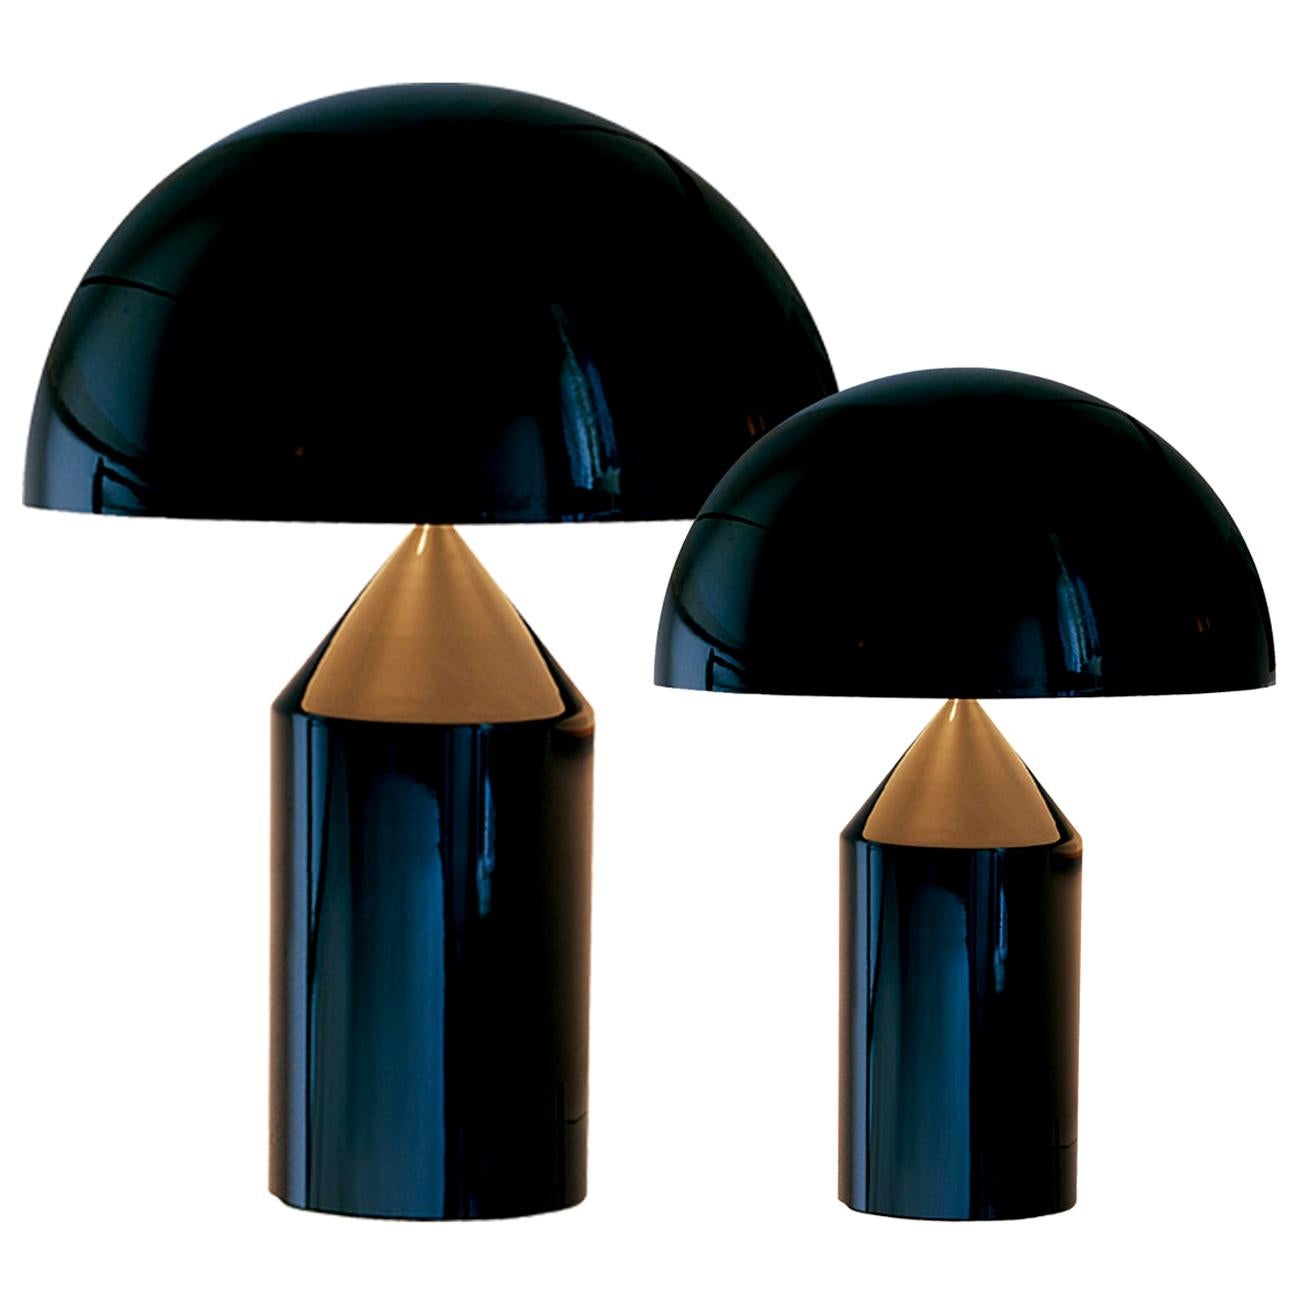 Set of 'Atollo' Large and Medium Black Table Lamp designed by Vico Magistretti